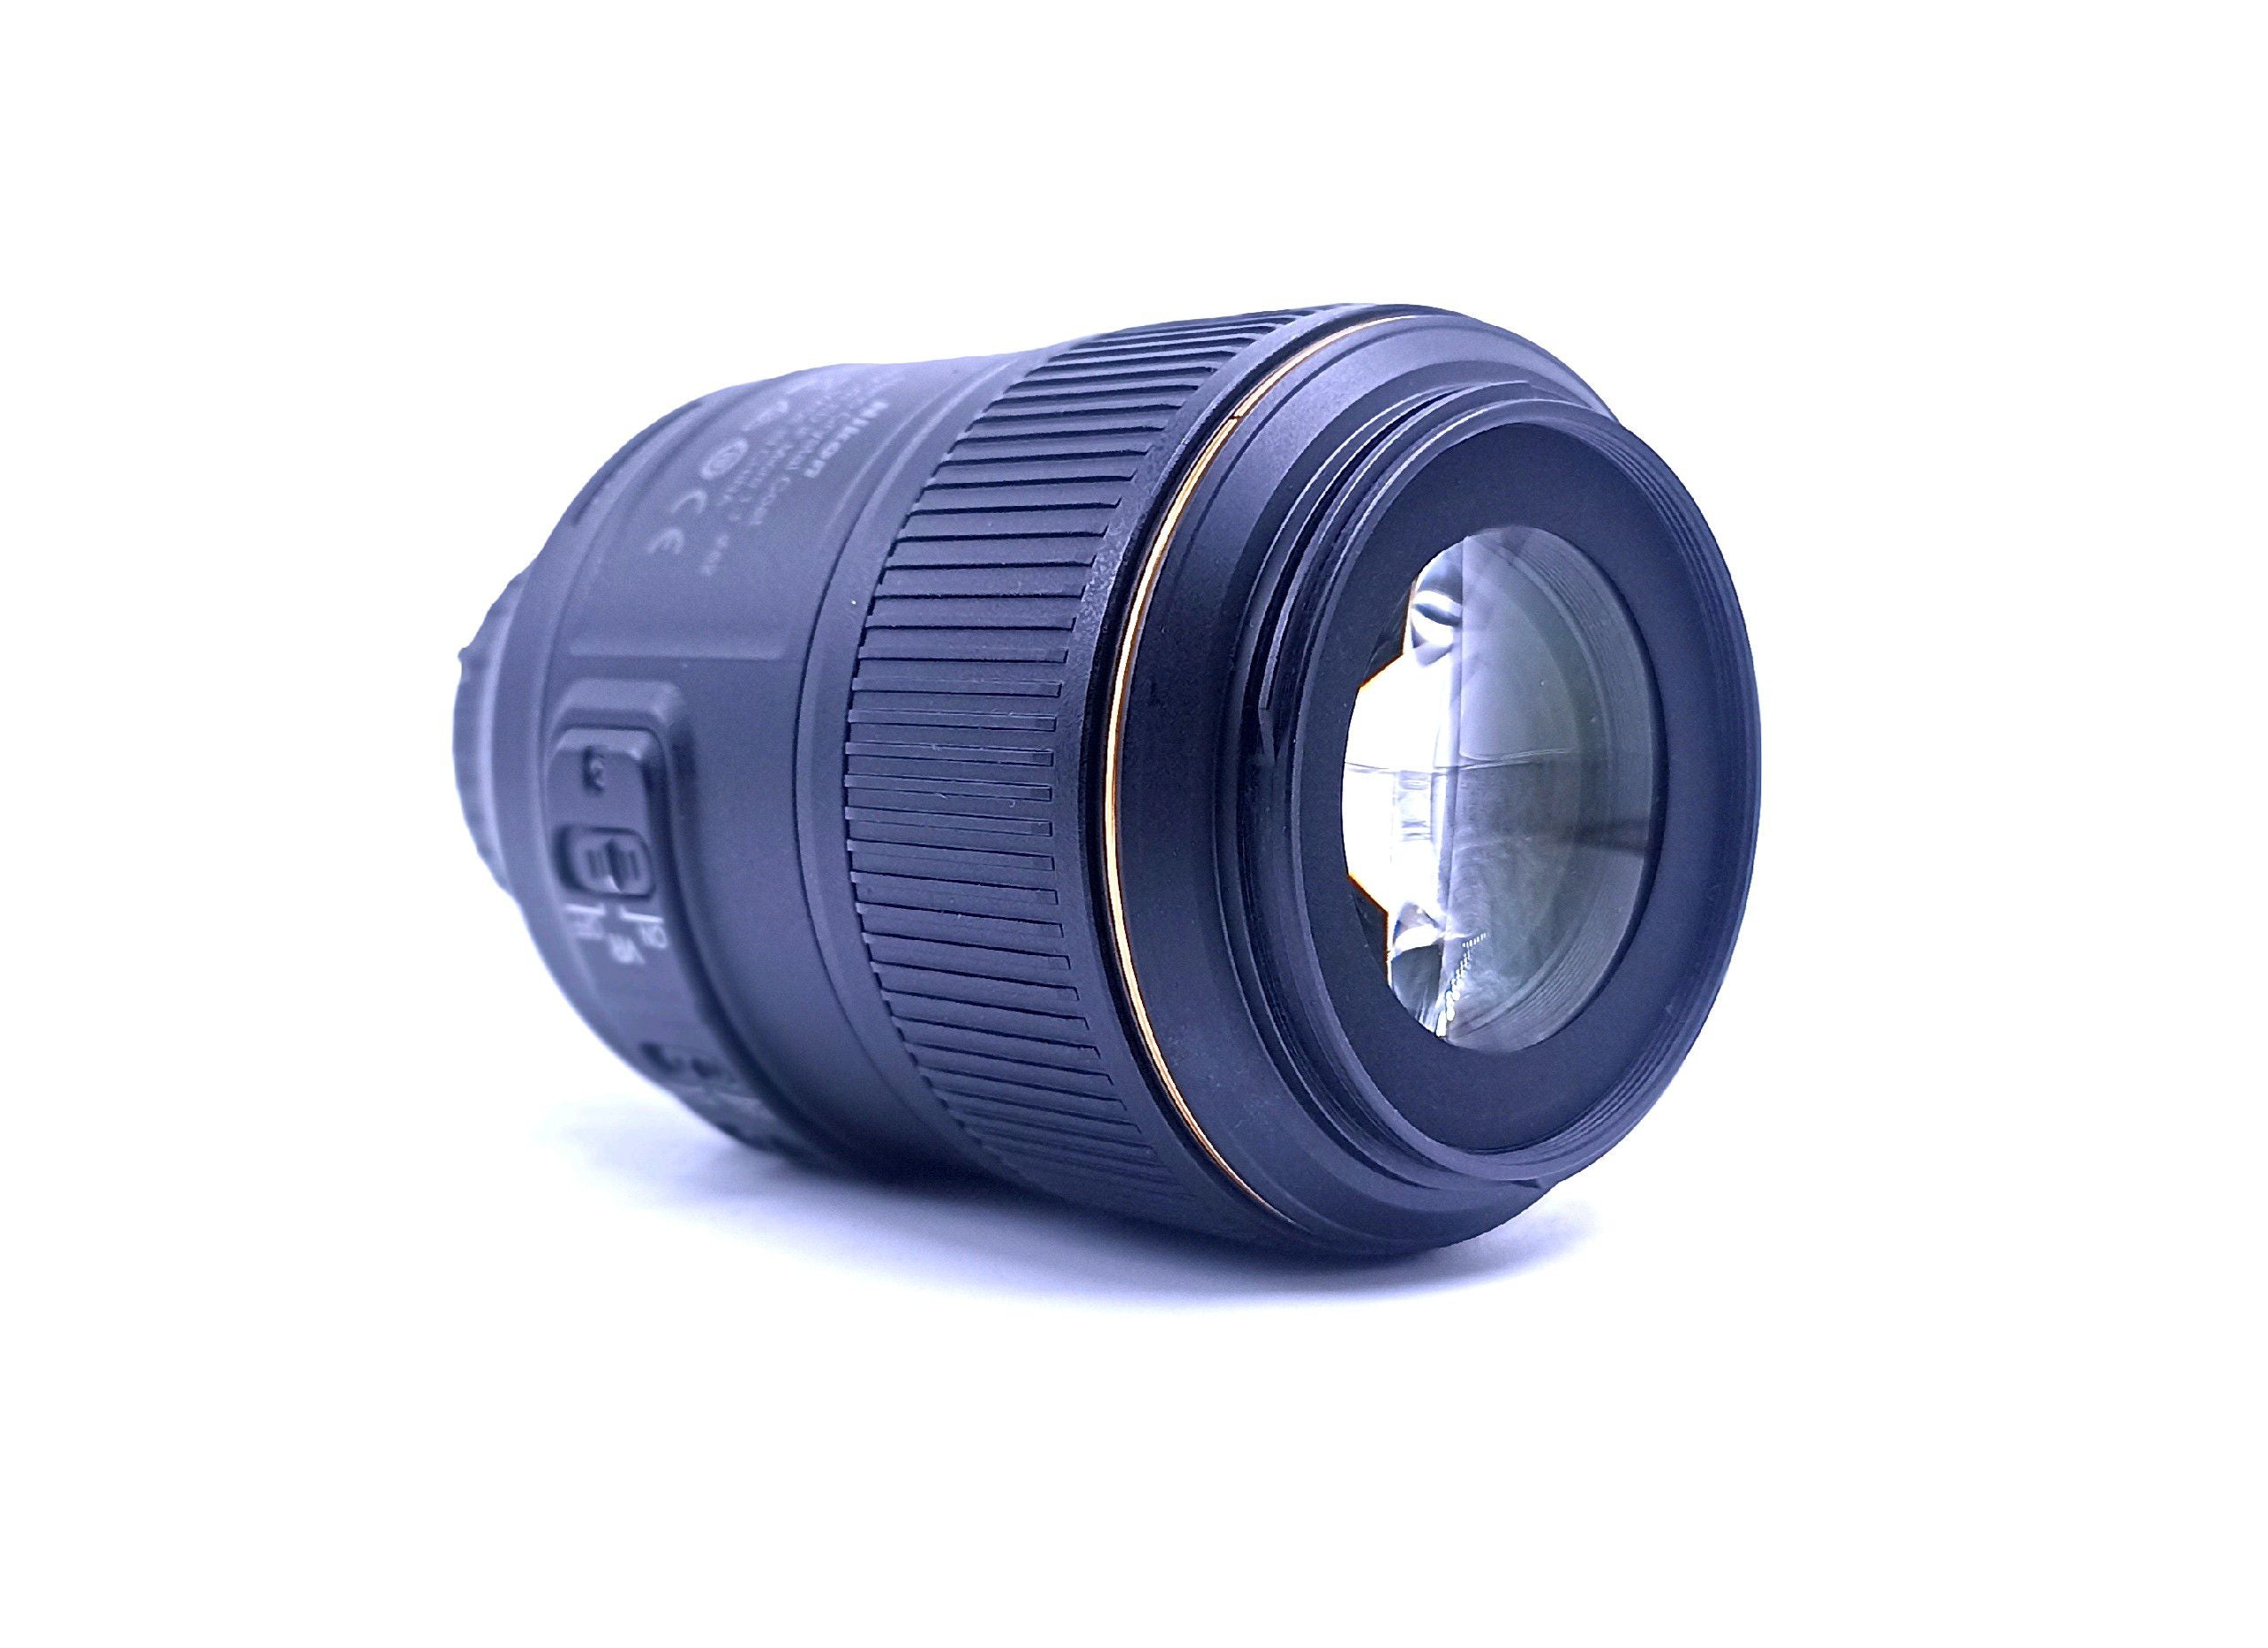 Used Nikon 105mm af s f 2.8g VR IF ED Micro Prime Lens